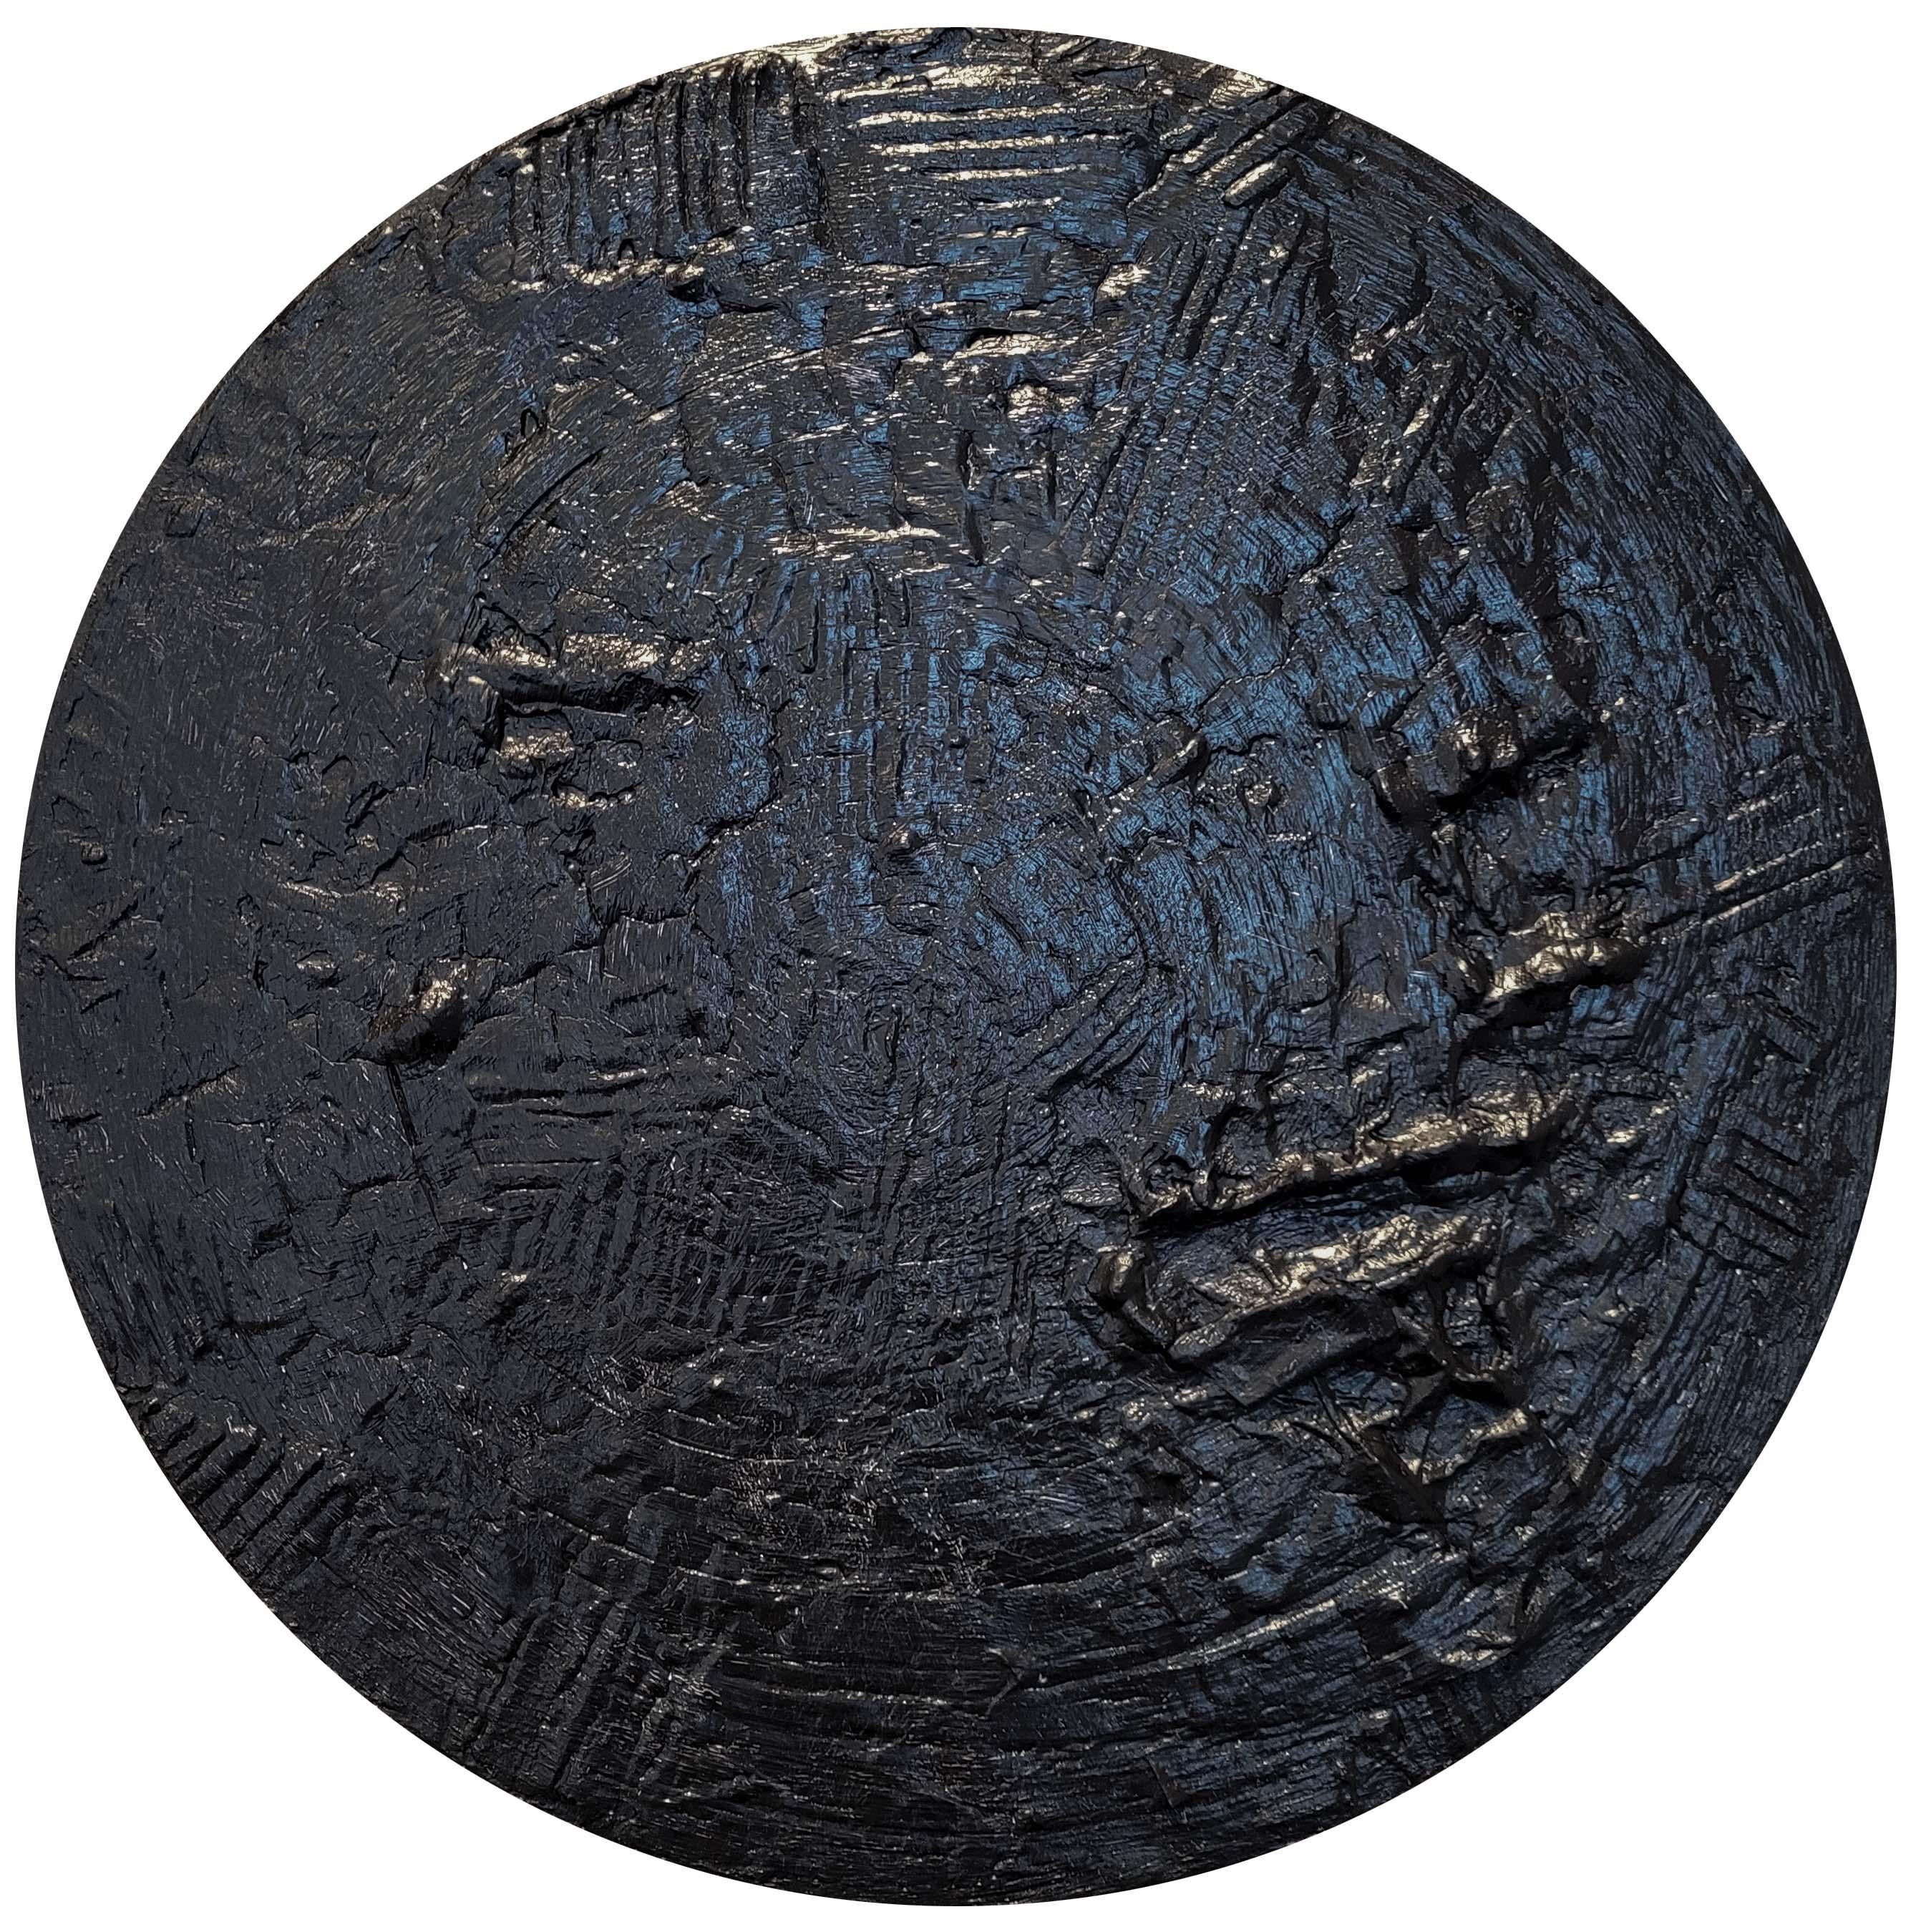 Tactile 11 Peinture moderne texturée noire - Mixed Media Art de Debra Ferrari